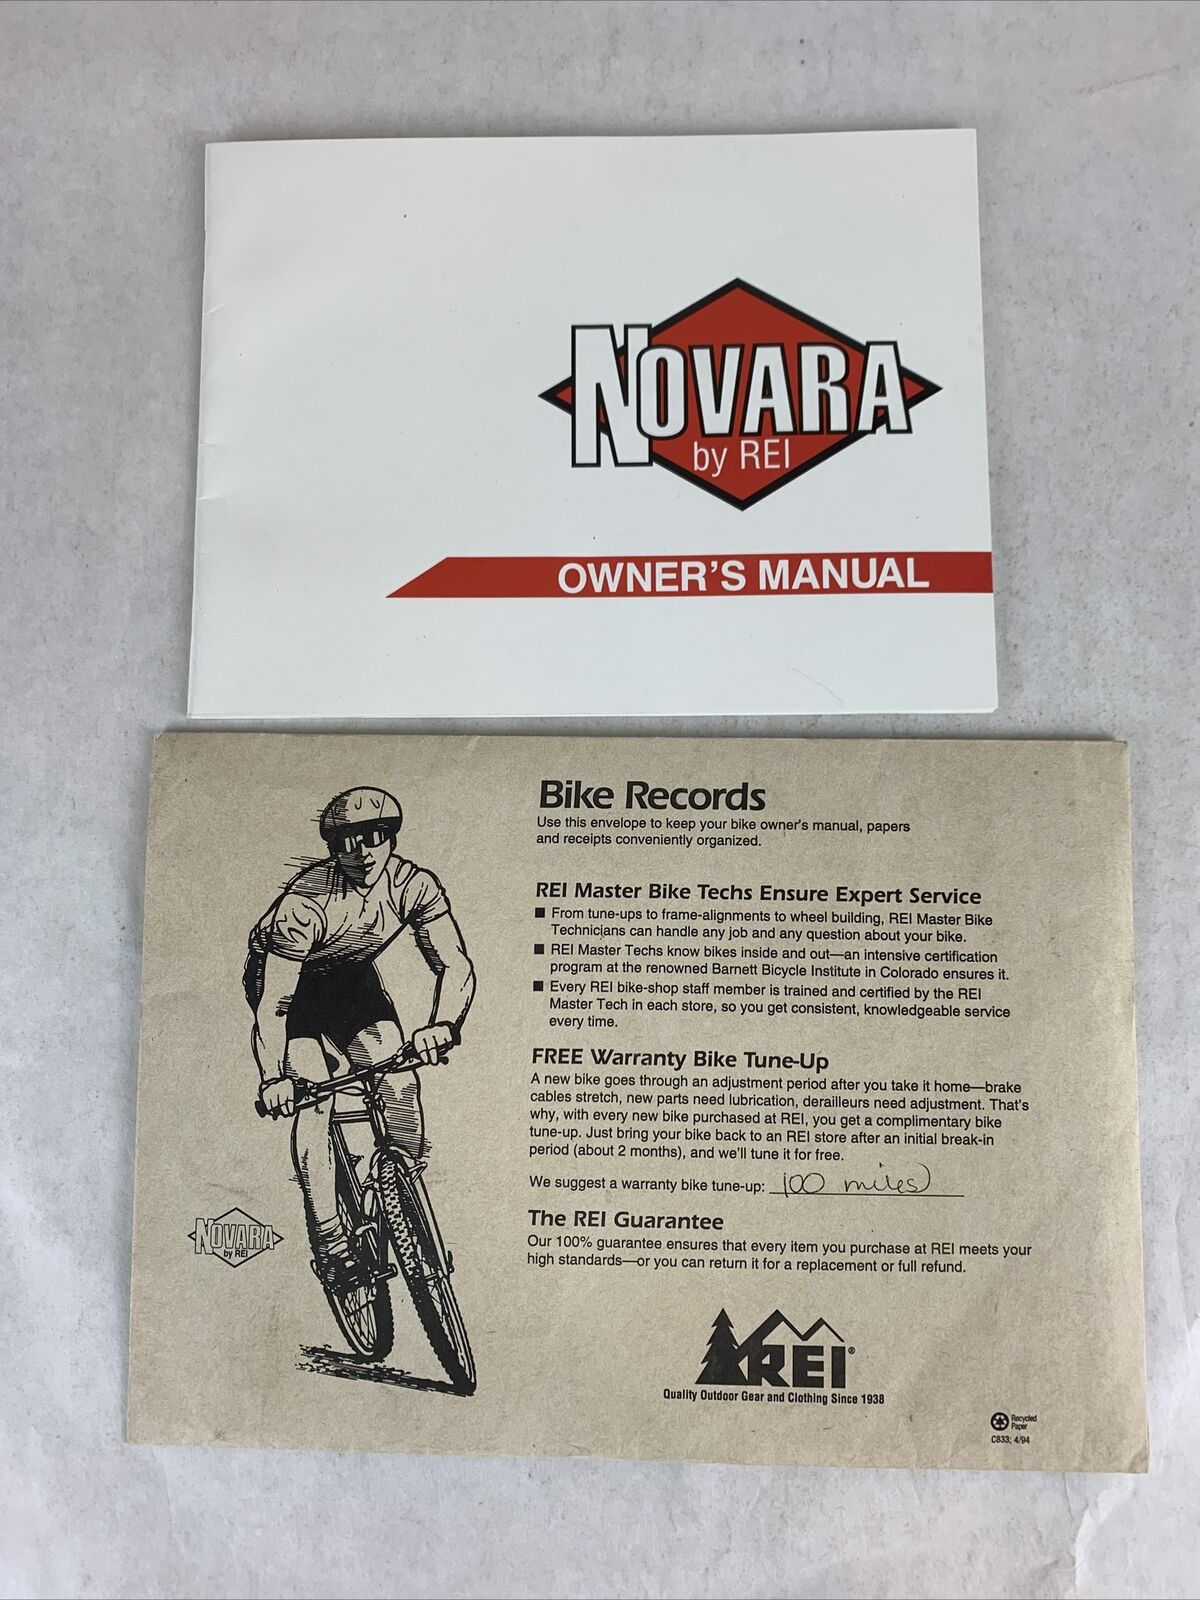 Novara by REI Bicycle Owner's Manual 1994